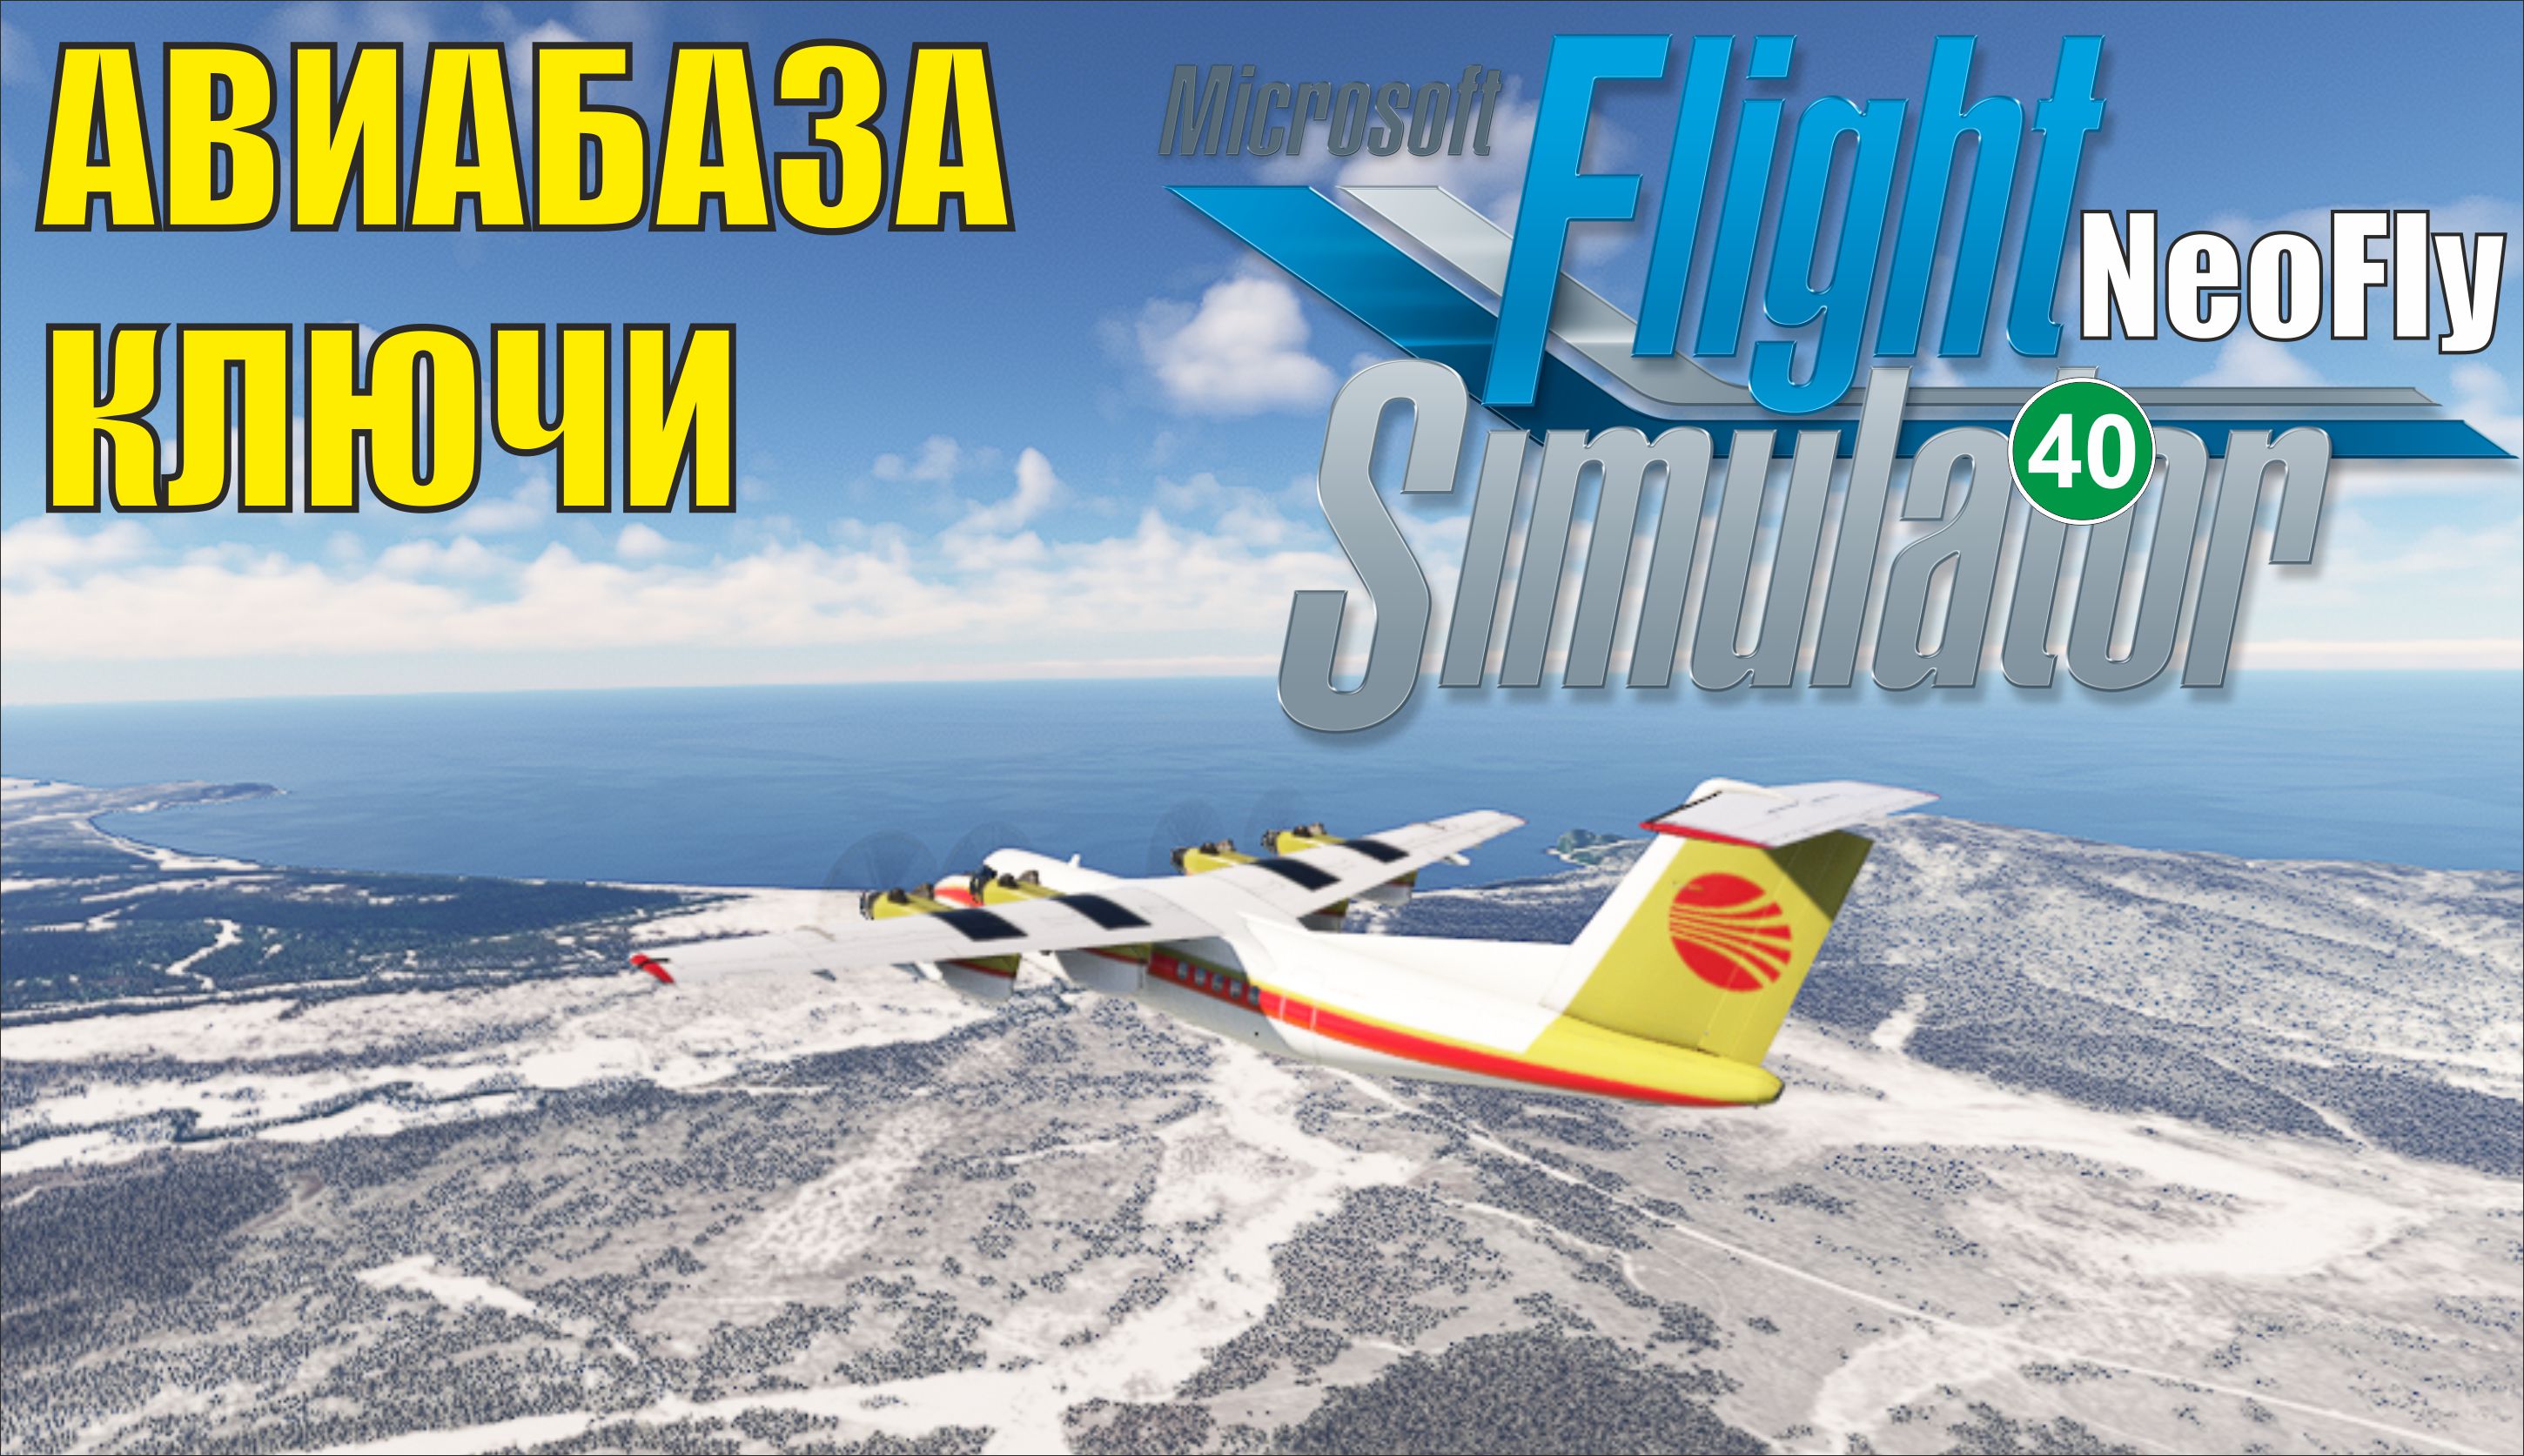 Microsoft Flight Simulator 2020 (NeoFly) - Авиабаза Ключи